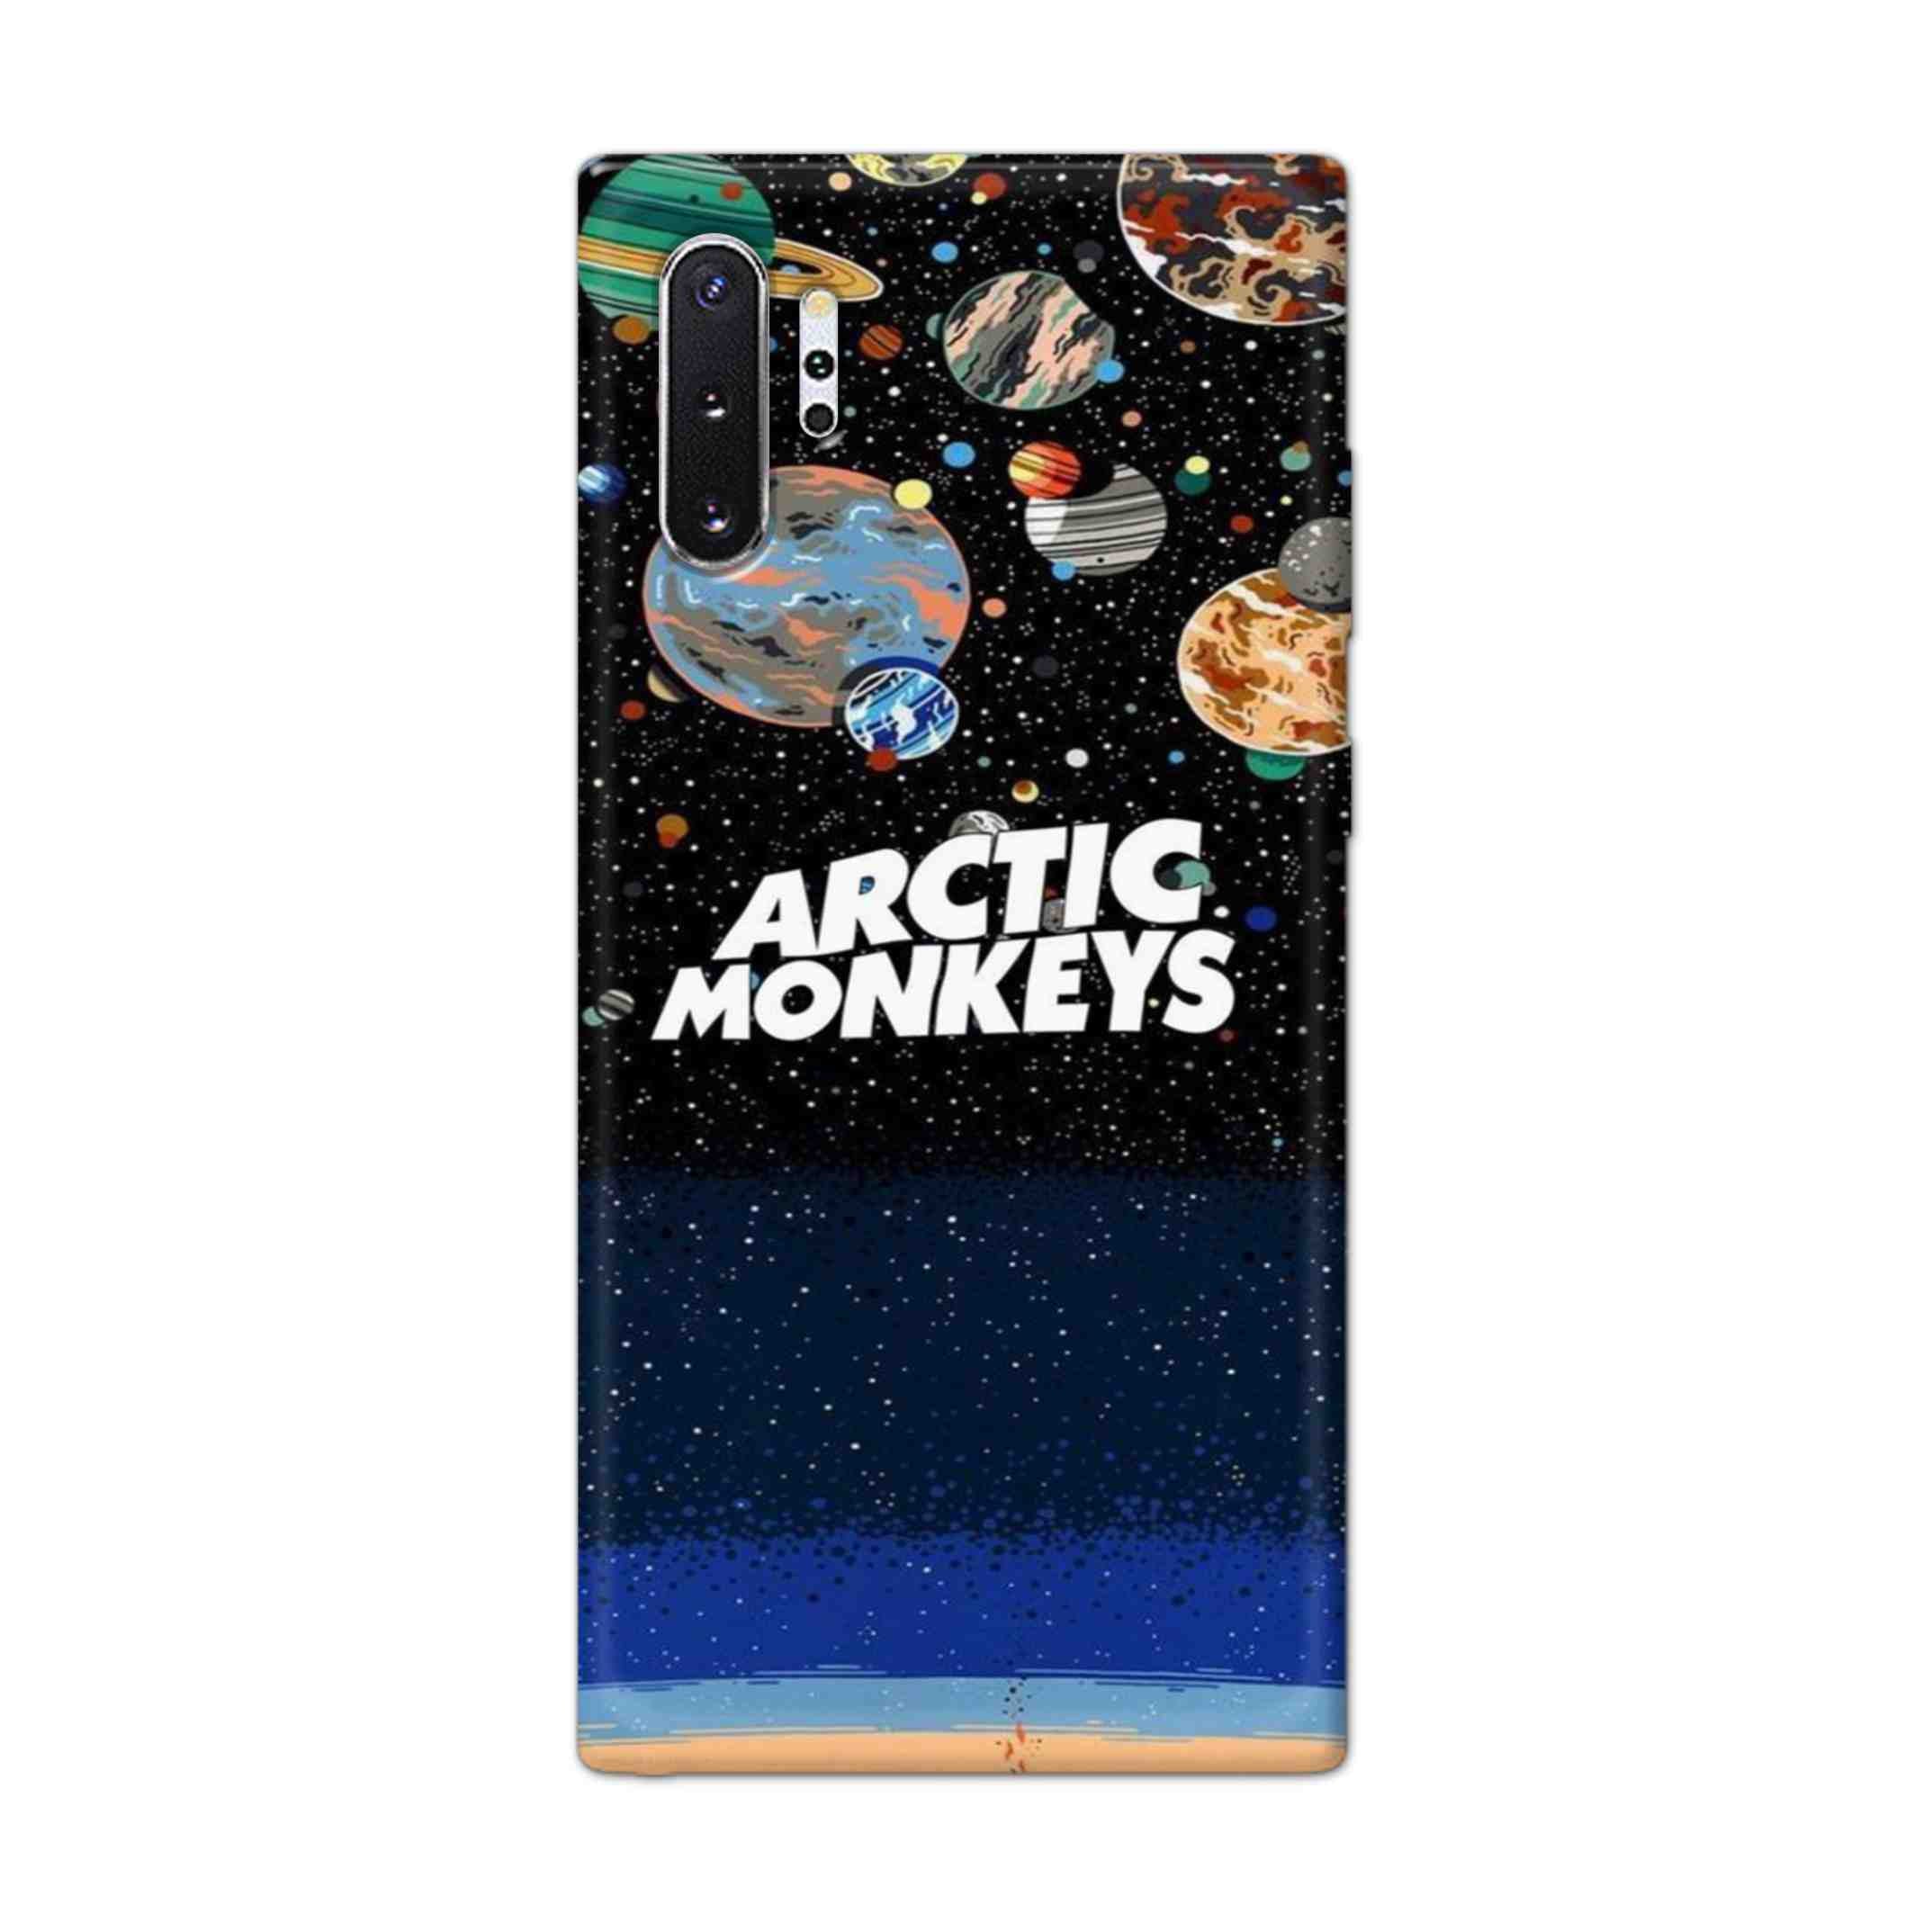 Buy Artic Monkeys Hard Back Mobile Phone Case Cover For Samsung Note 10 Plus (5G) Online